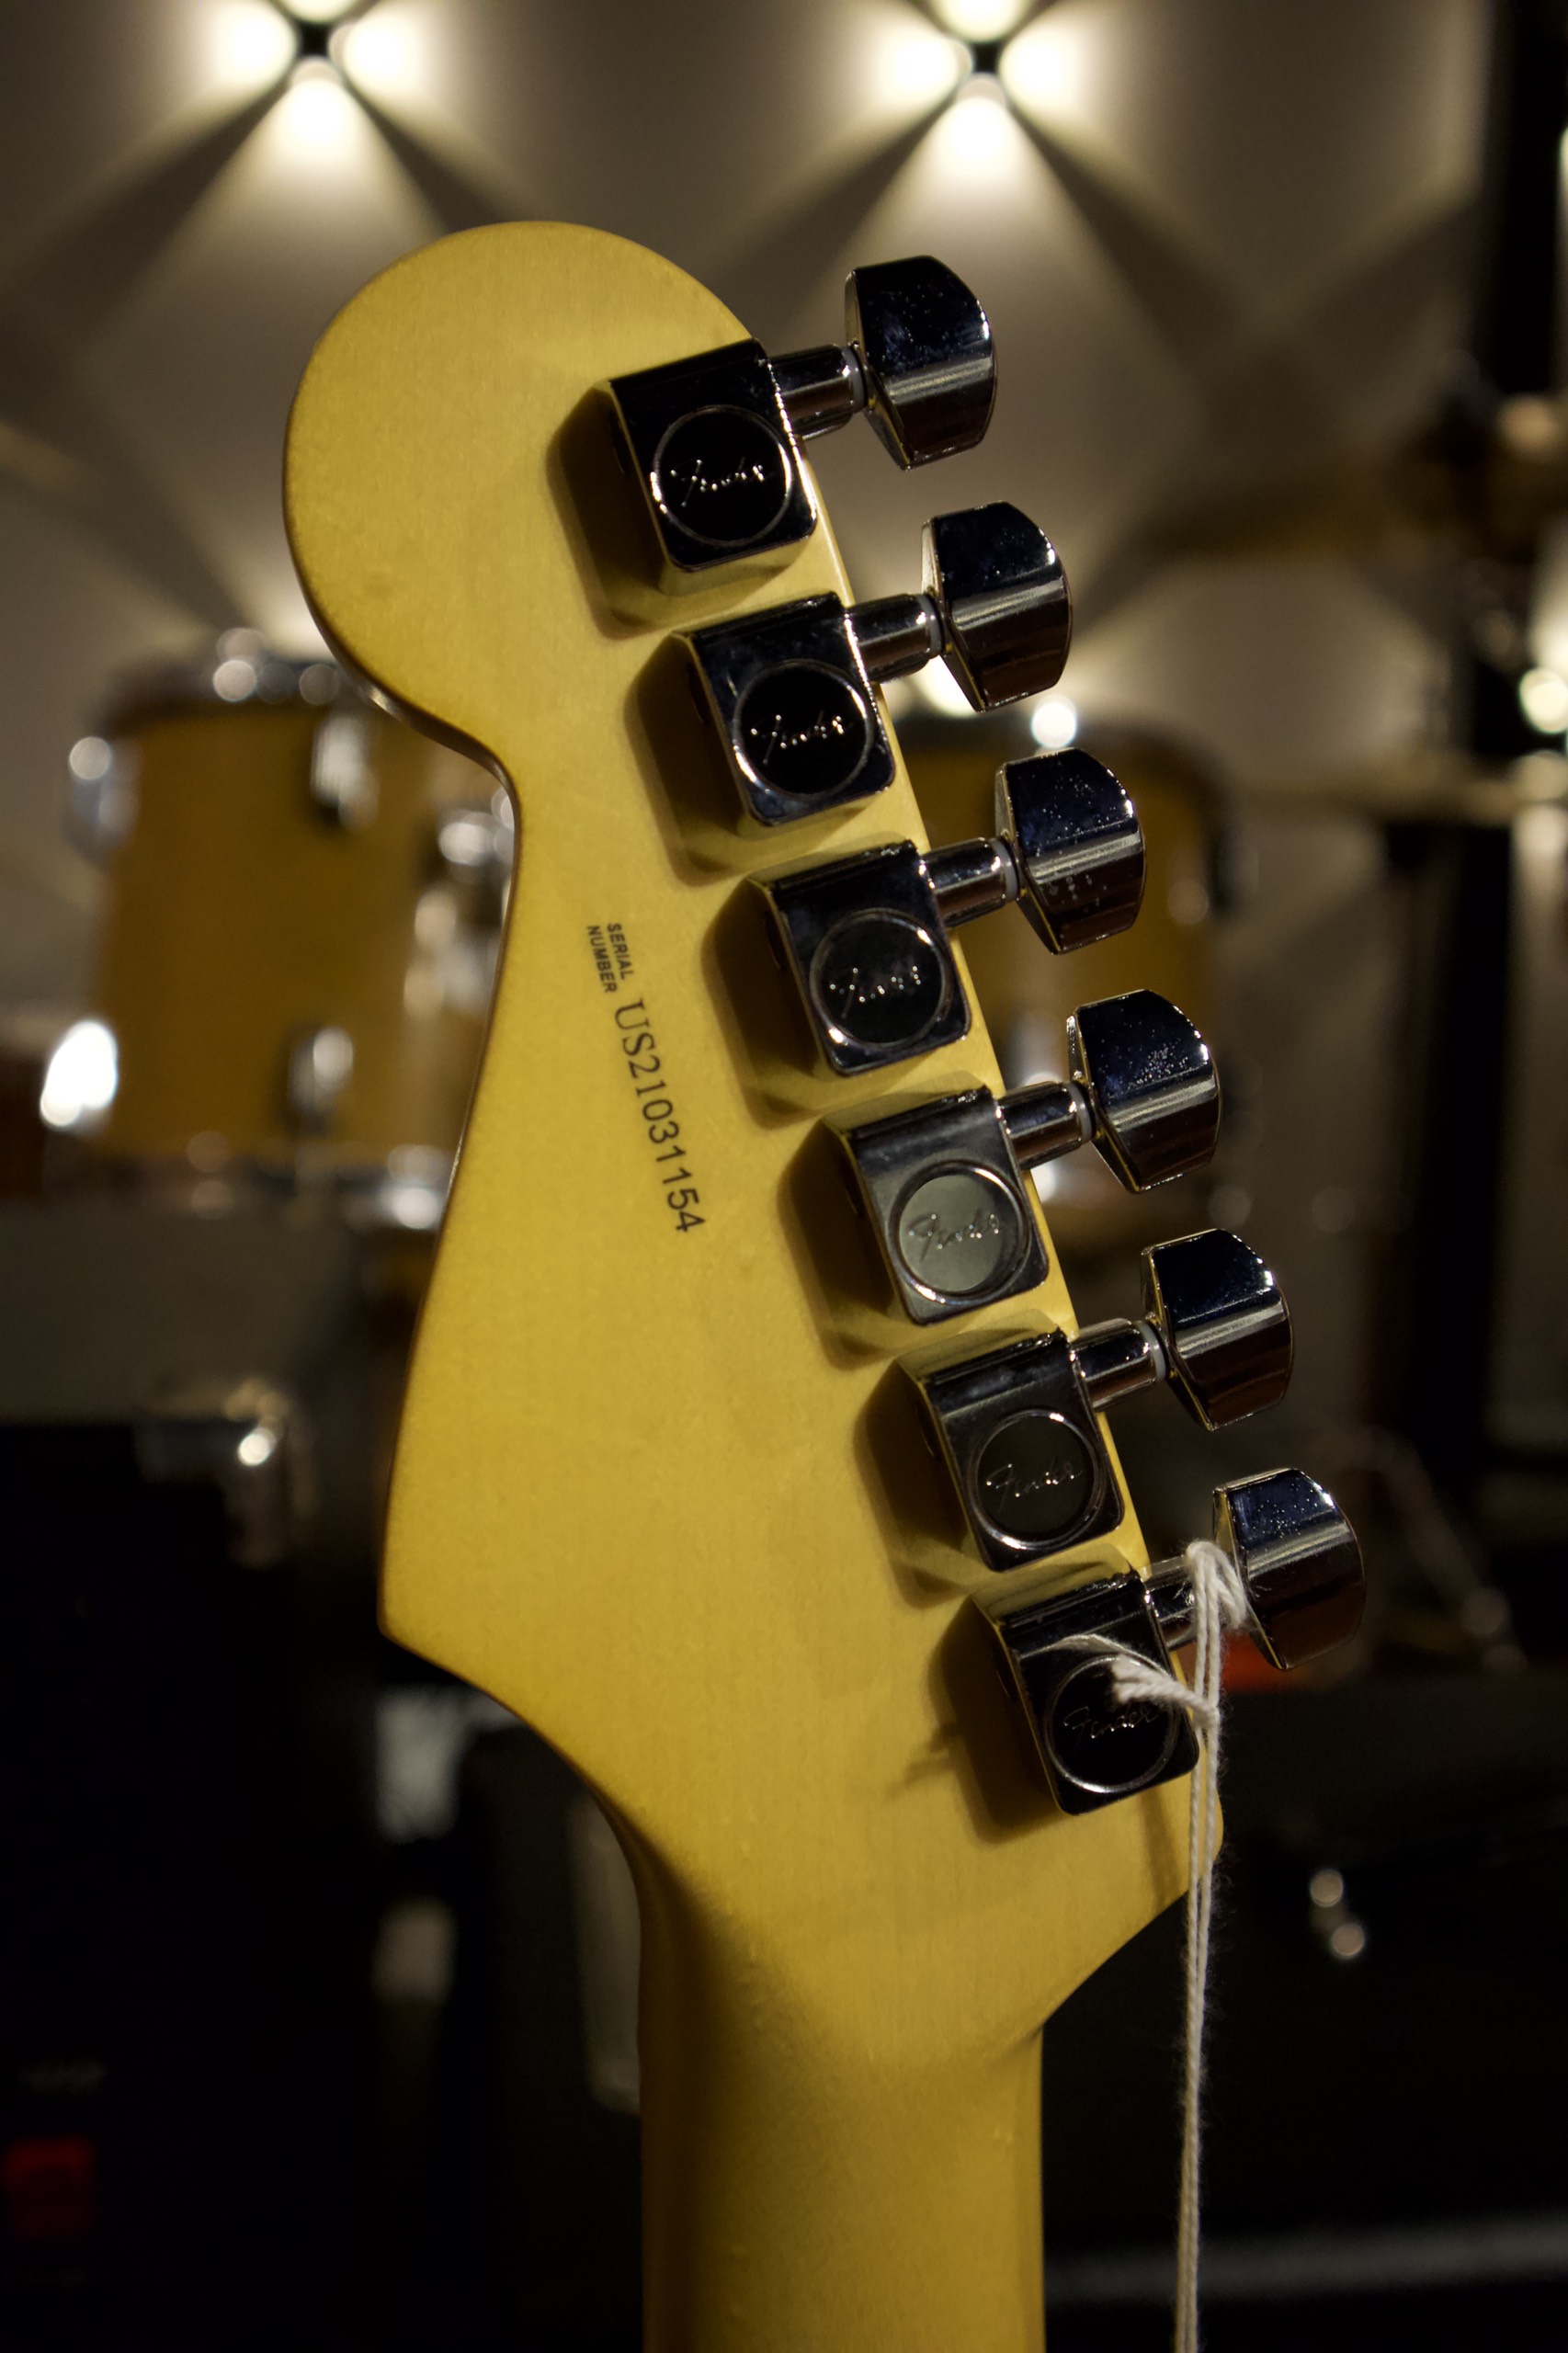 American Professional II Stratocaster (3-Color Sunburst/Maple